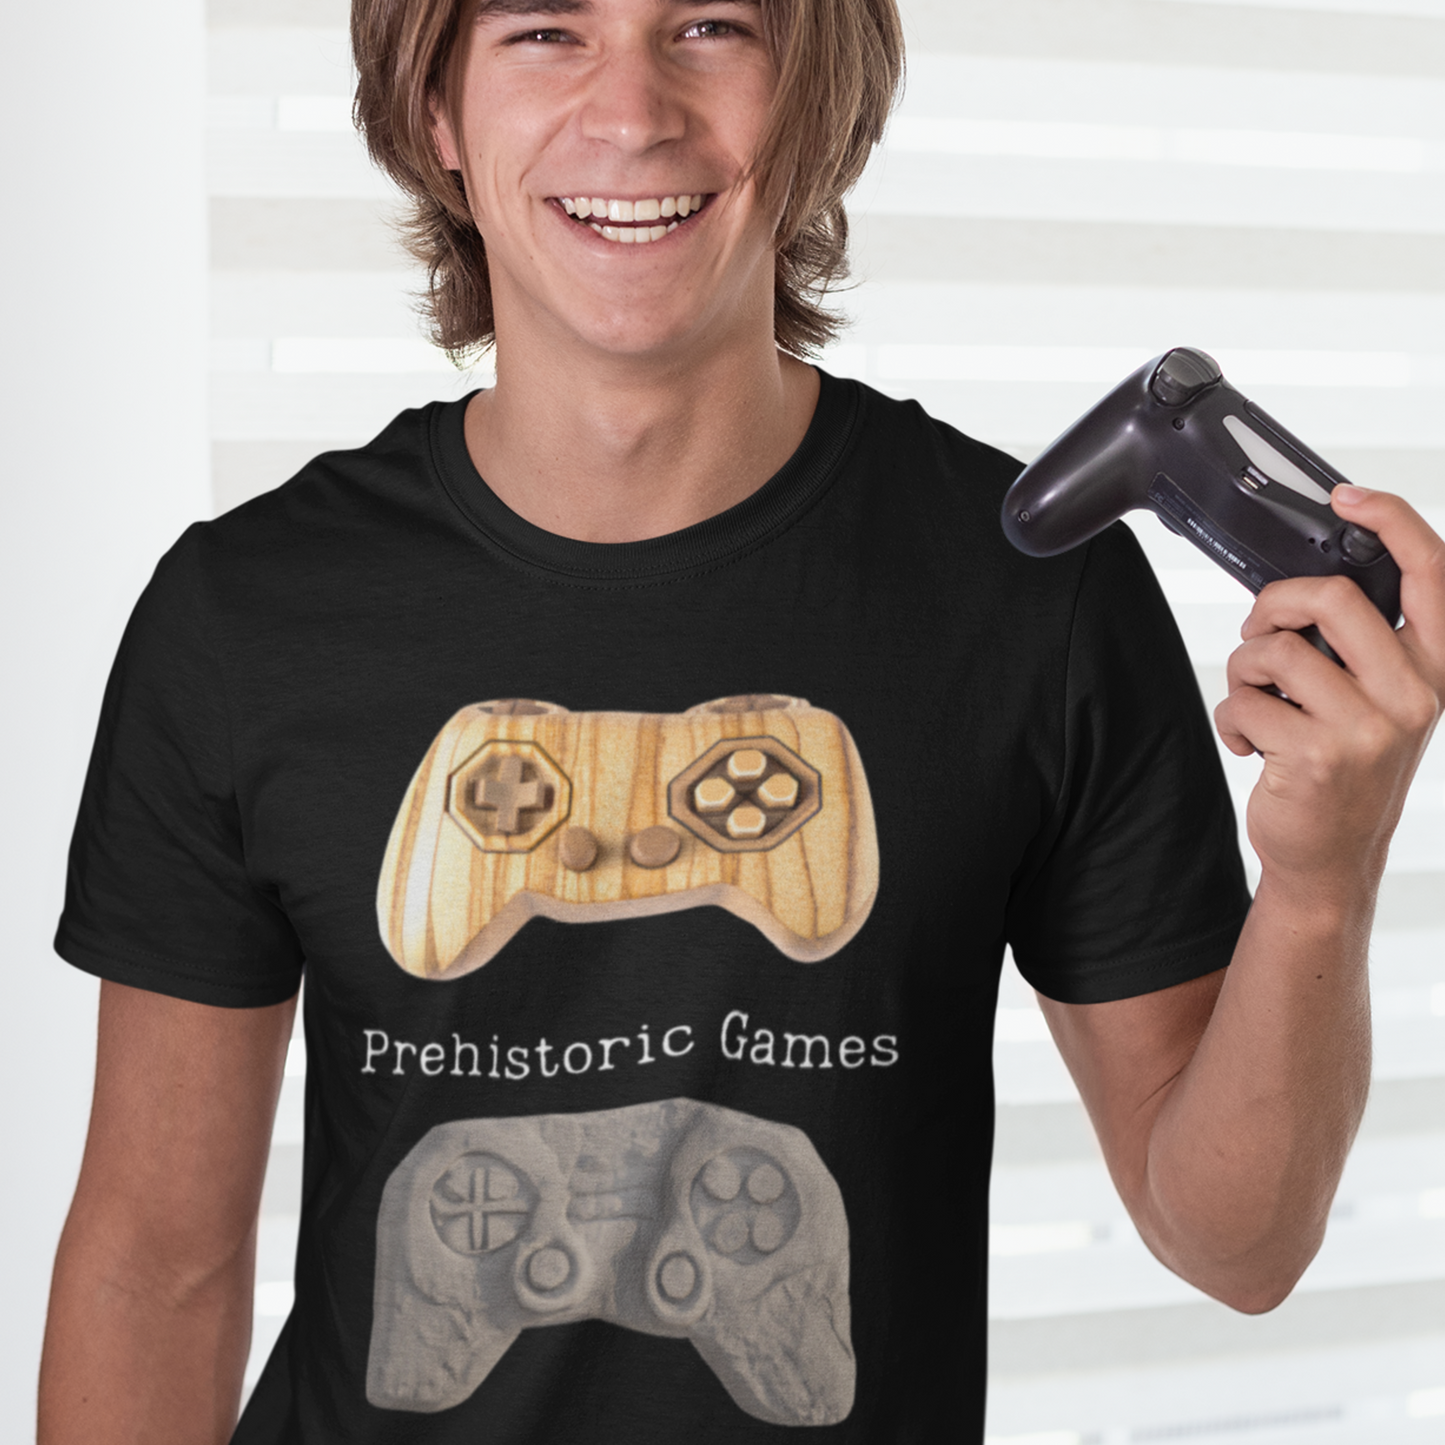 Prehistoric Games T-Shirt